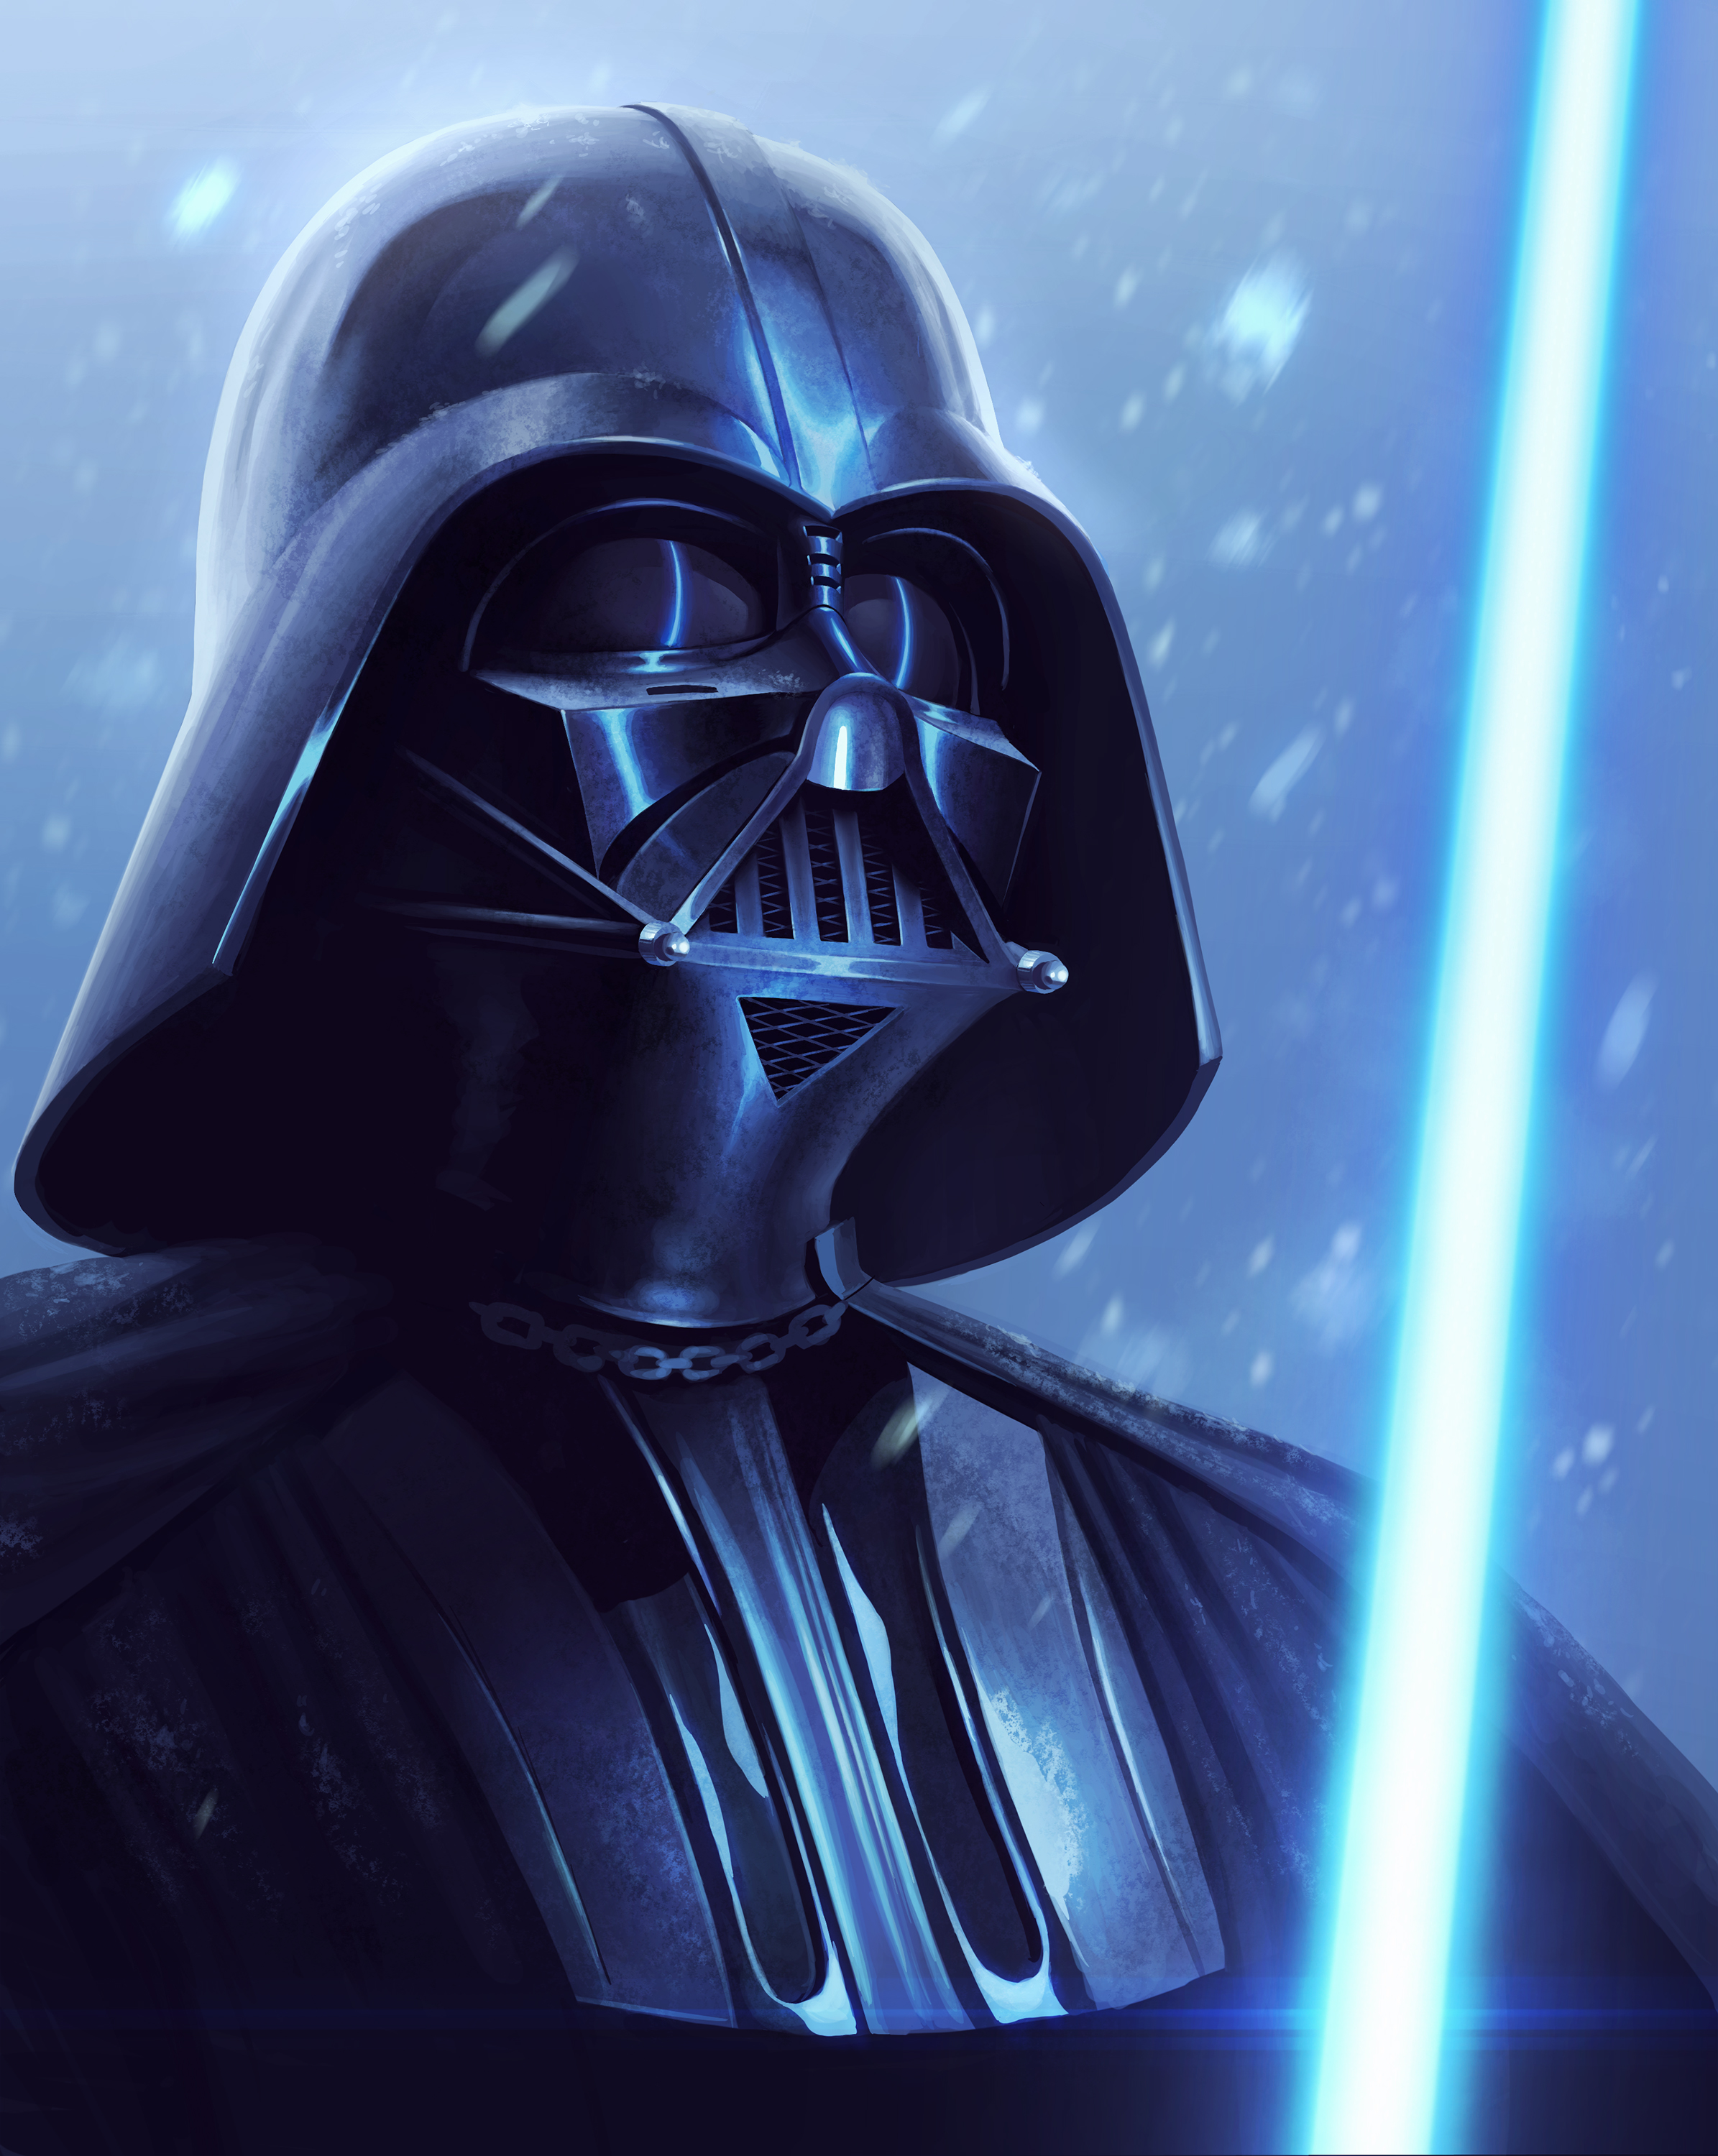 General 2390x3000 Star Wars Darth Vader Sith lightsaber blue background blue movies portrait display digital art